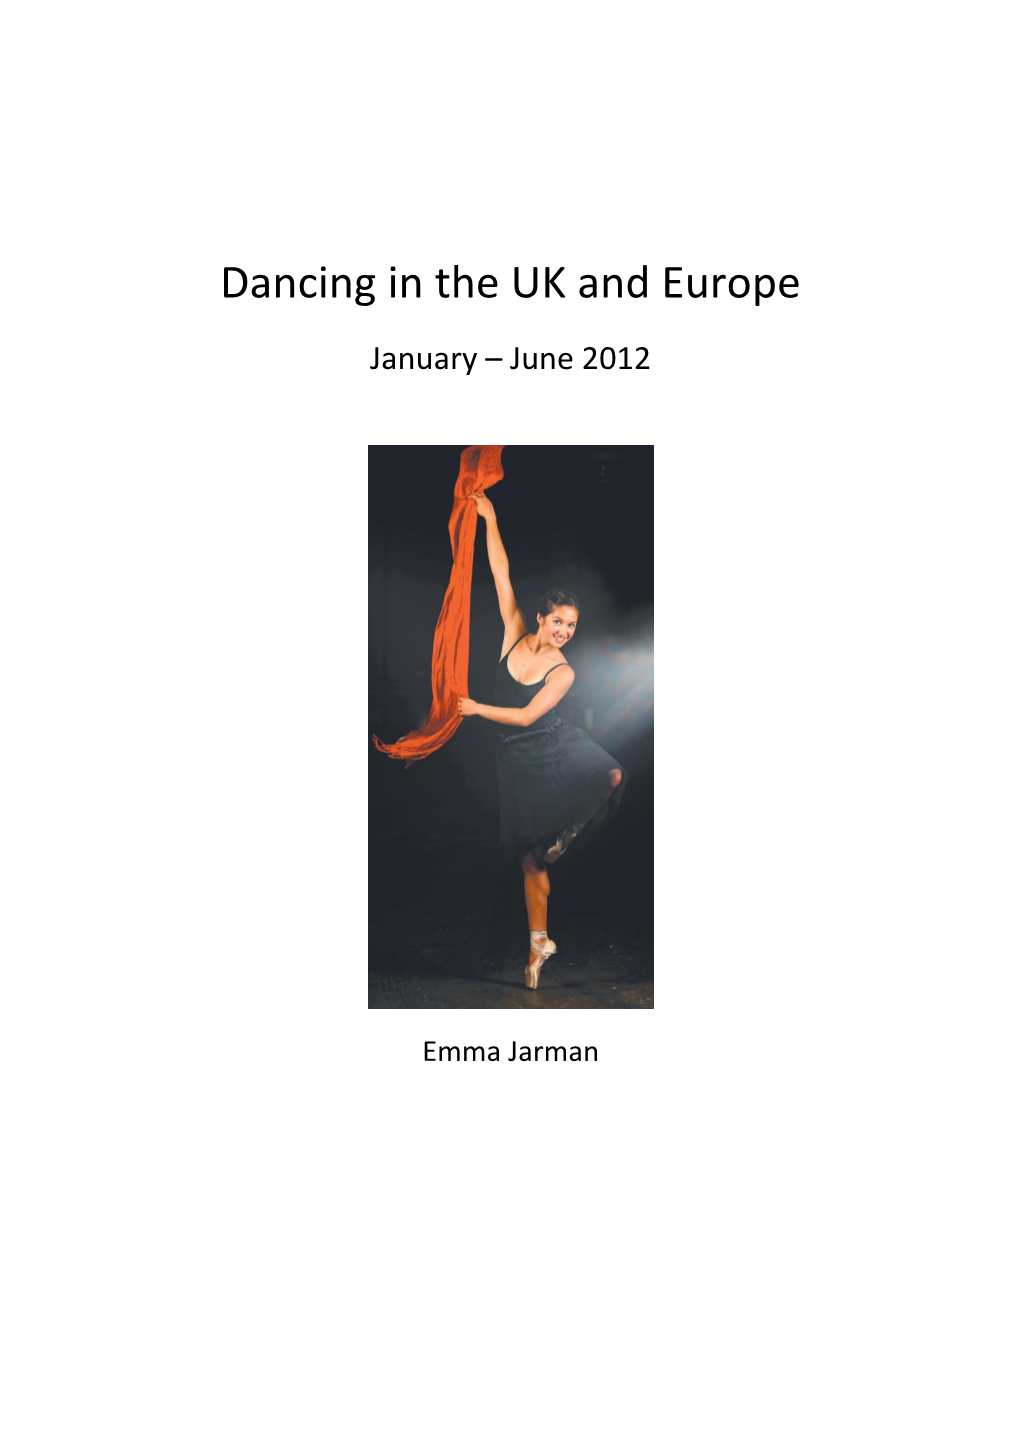 Dancing in the UK and Europe January – June 2012